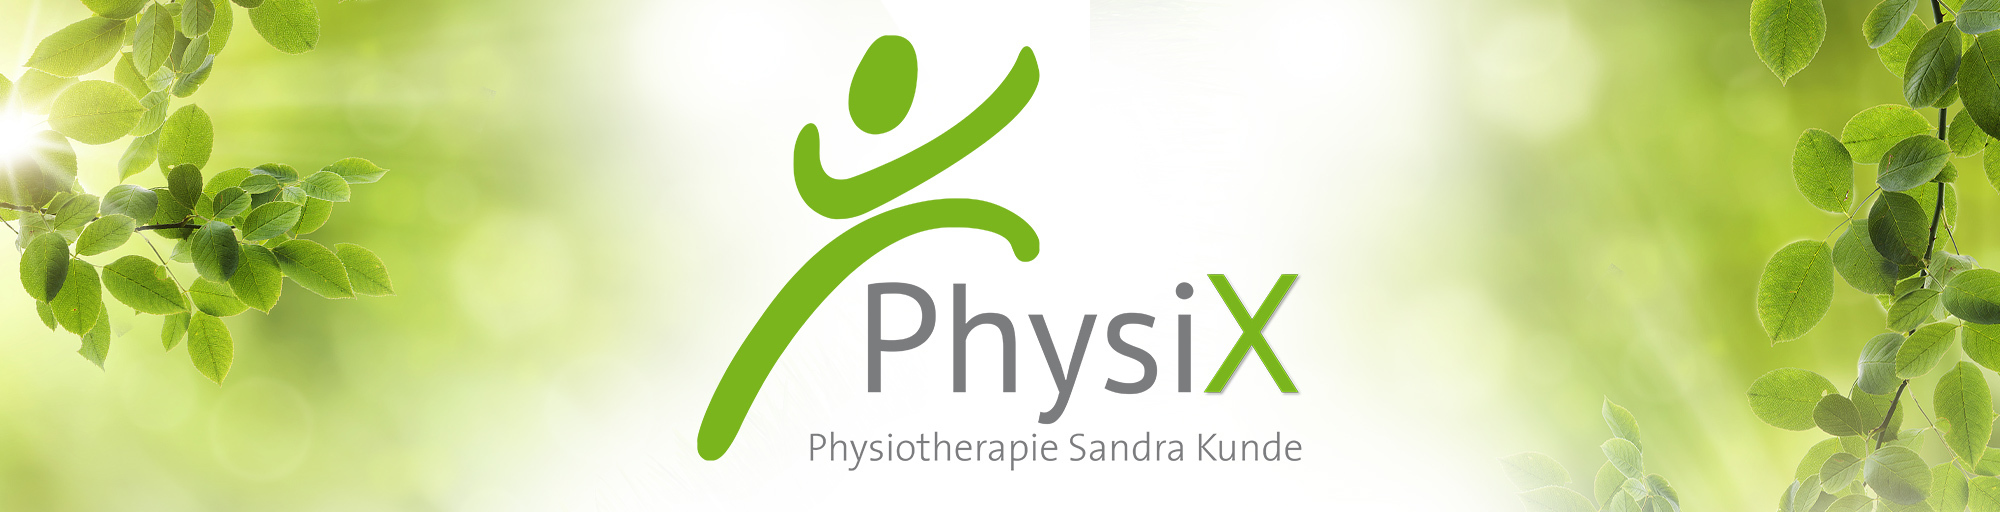 PhysiX Physiotherapie – Sandra Kunde